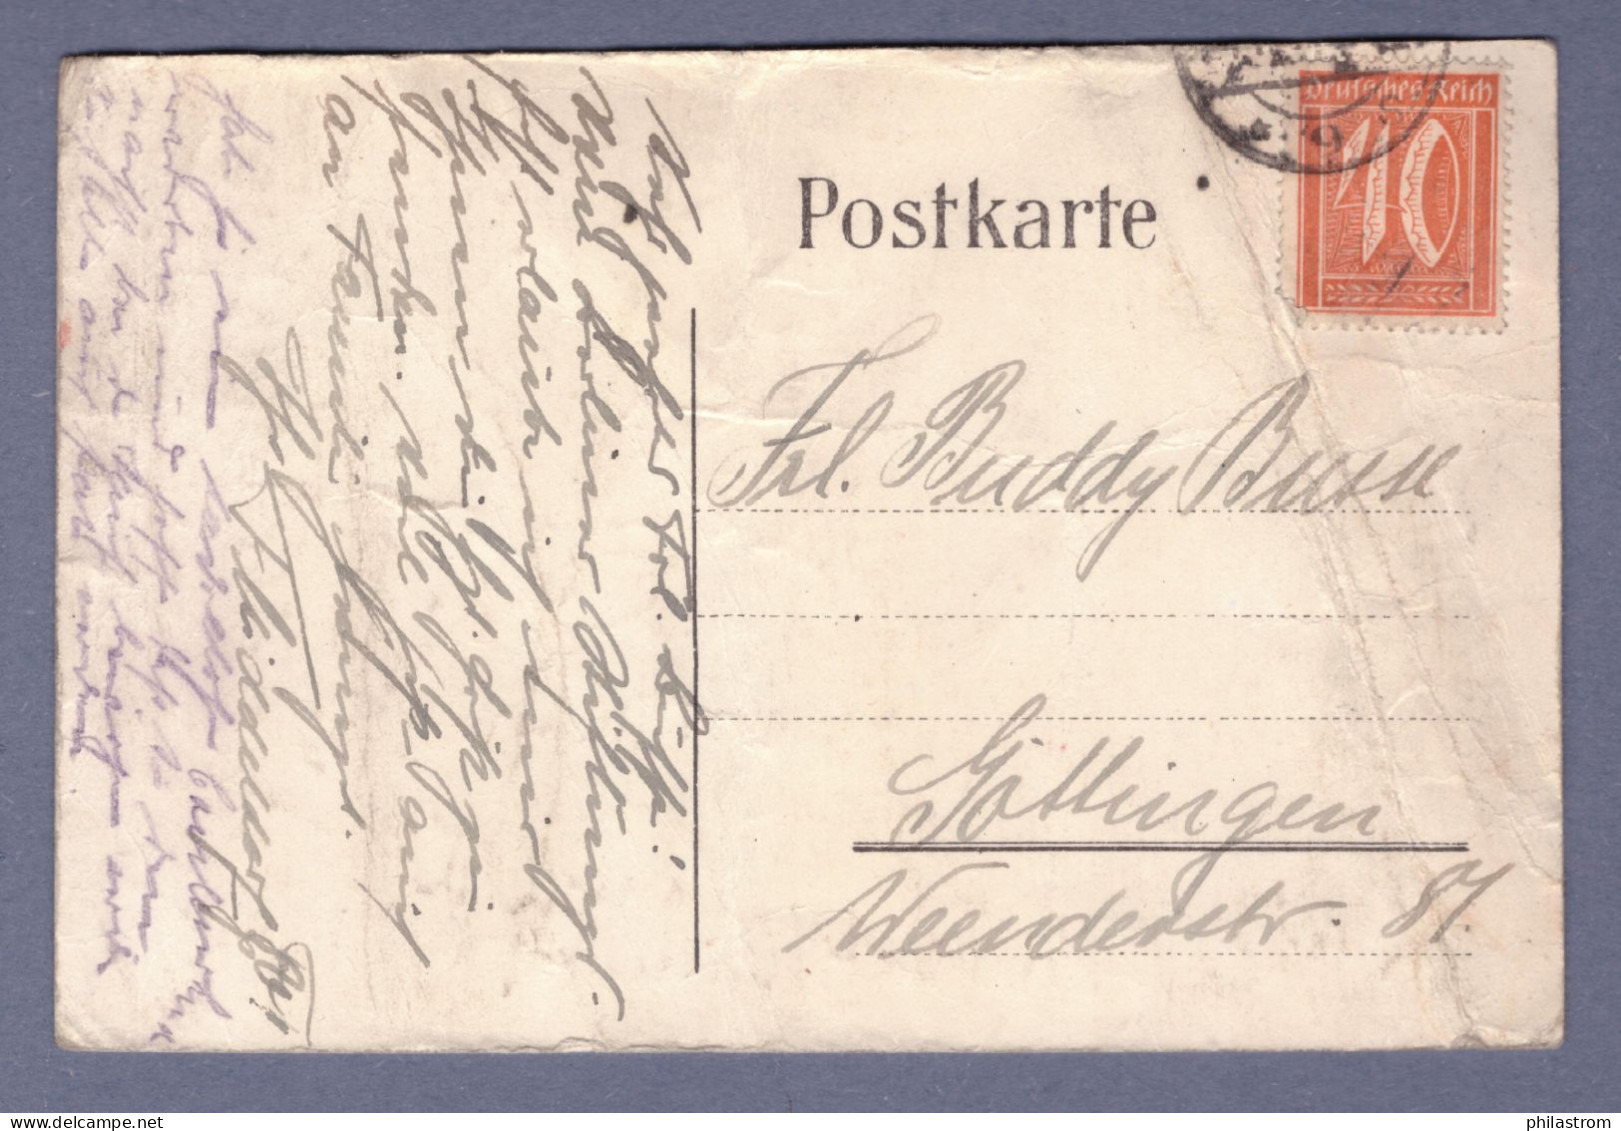 Weimar INFLA Postkarte (CG13110-259) - Covers & Documents